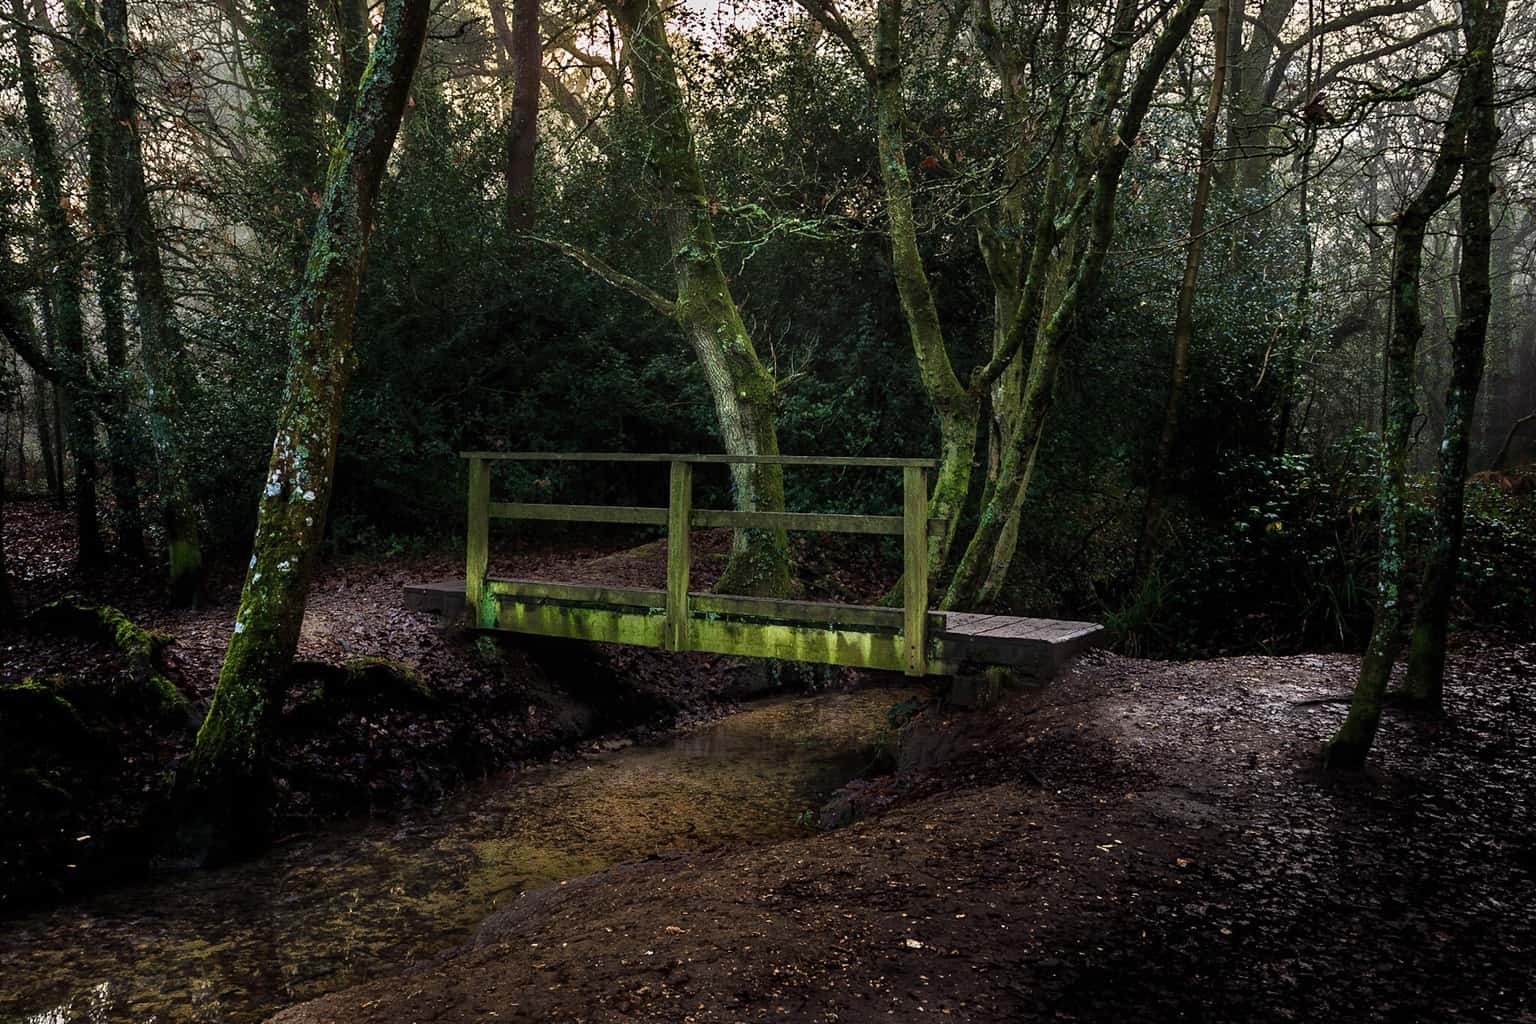  Footbridge in the woods - the original composition 